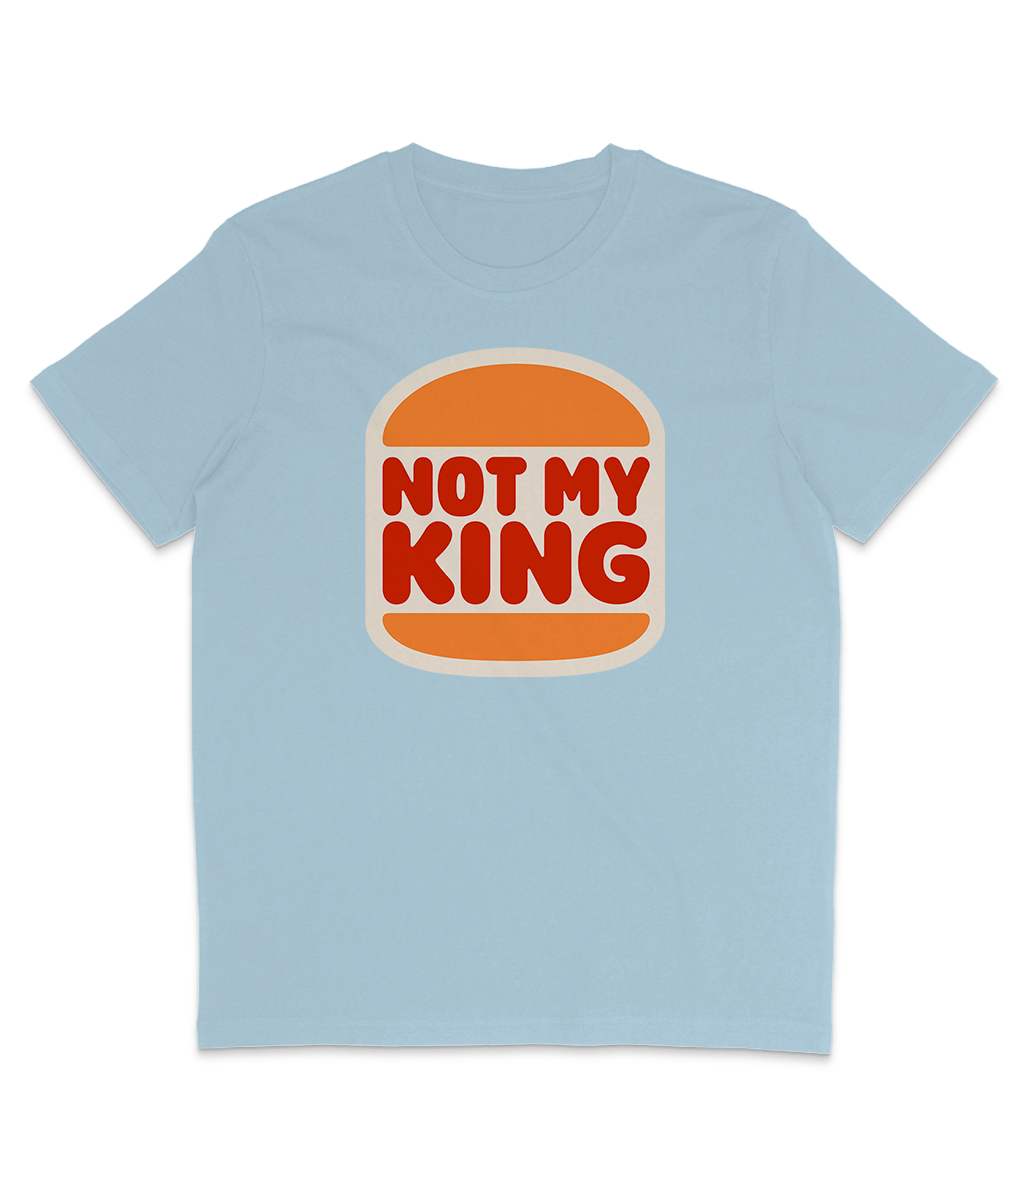 NOT MY KING - Burger